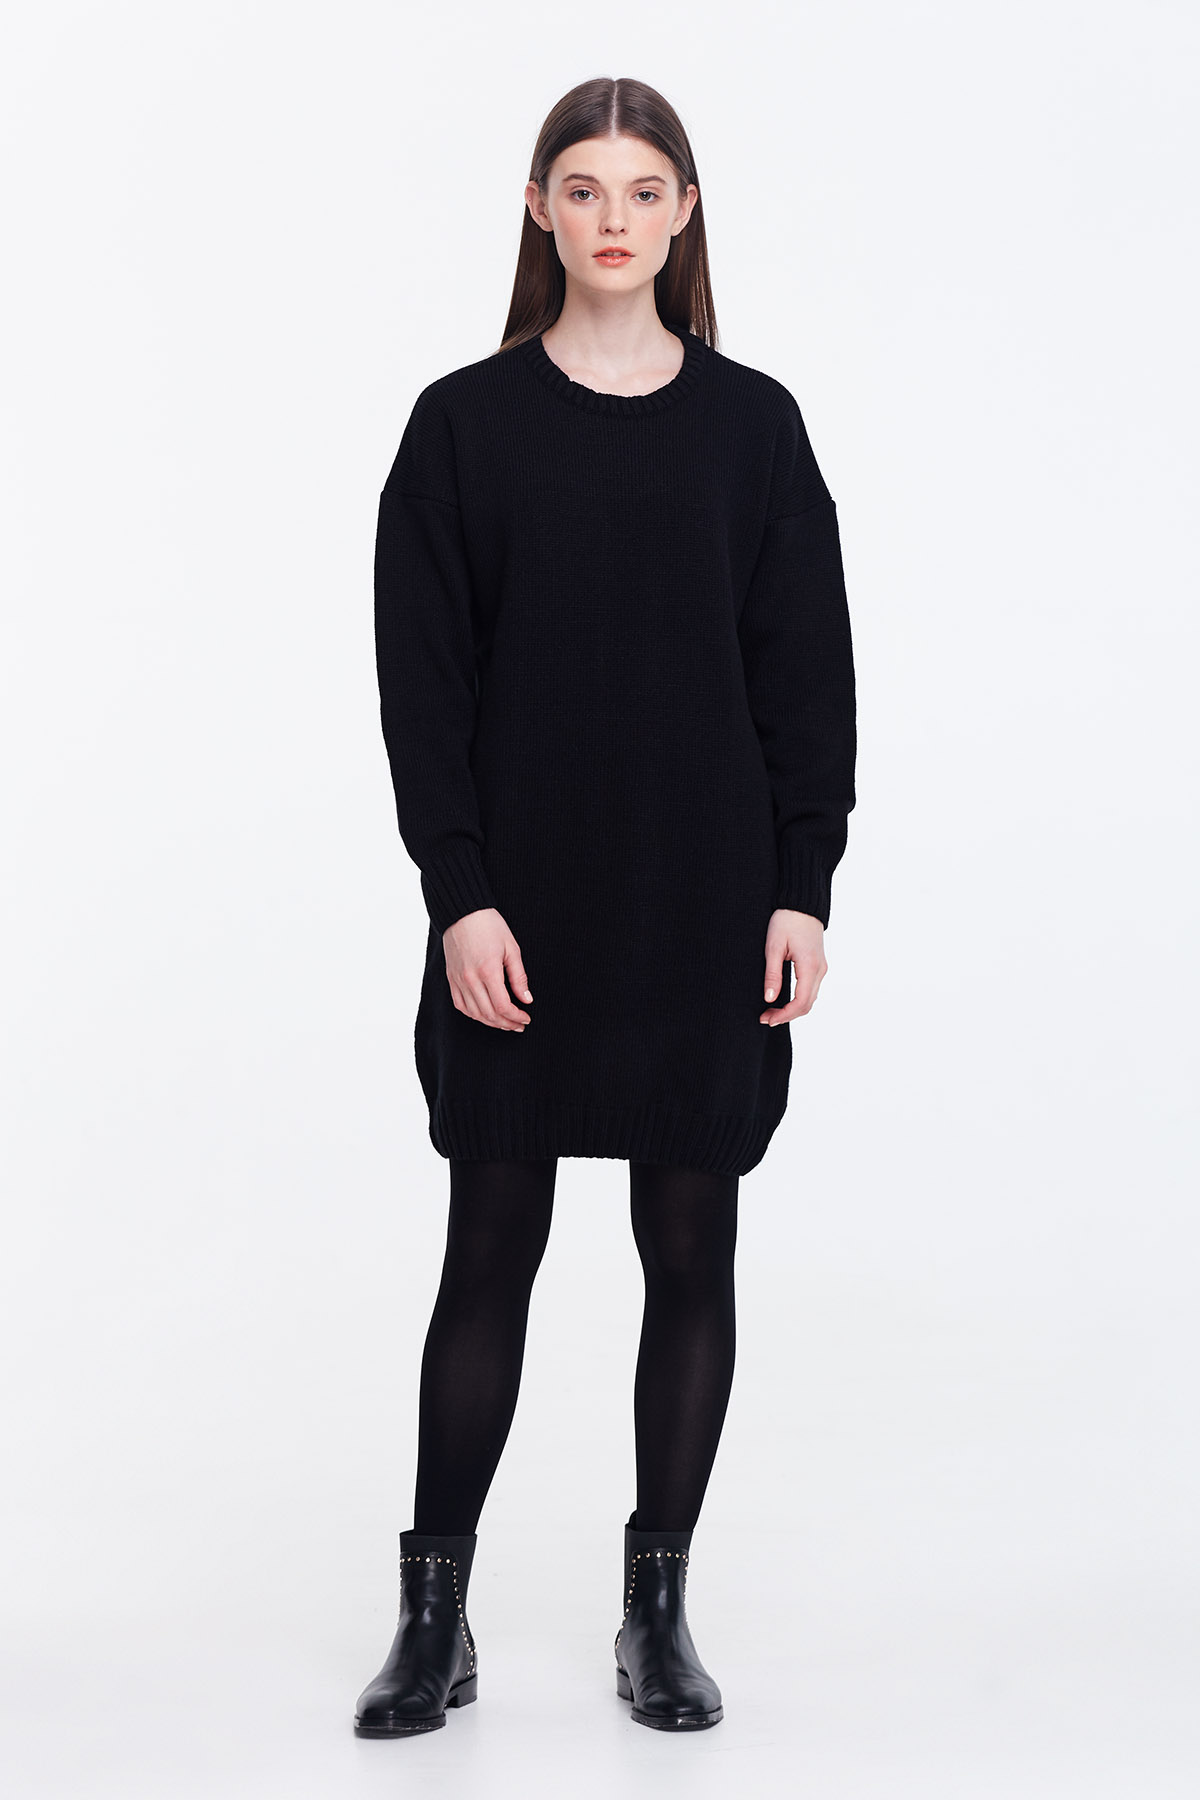 Loose-fitting black knit dress , photo 4